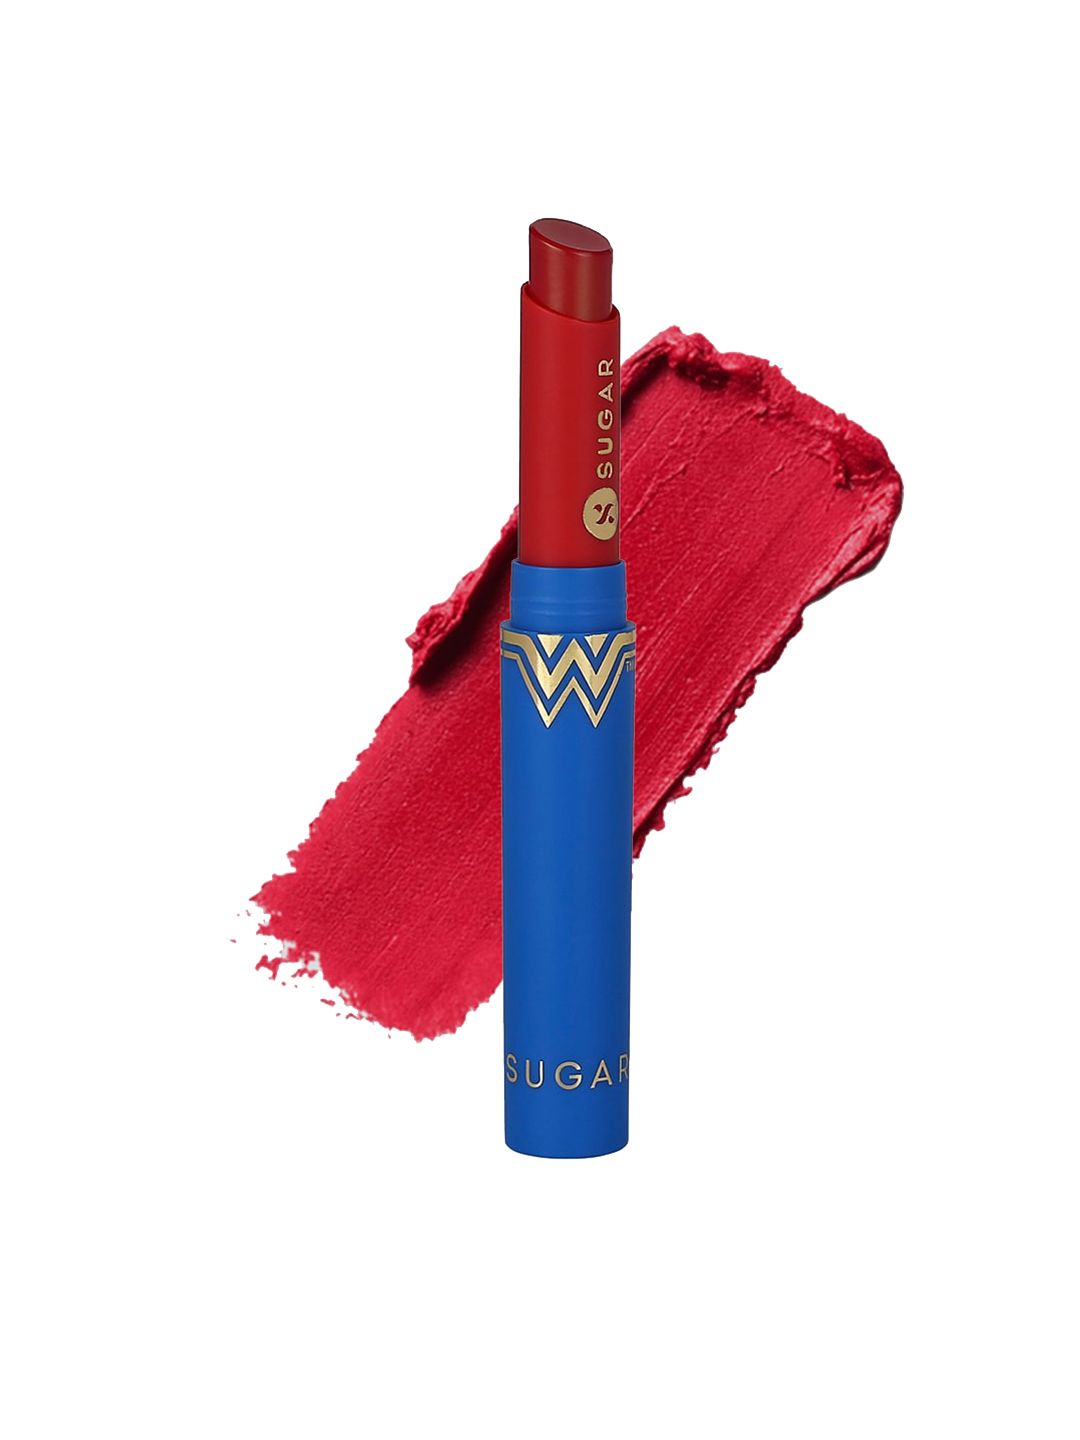 SUGAR Wonder Woman Creamy Matte Lipstick  05 Love Child Price in India